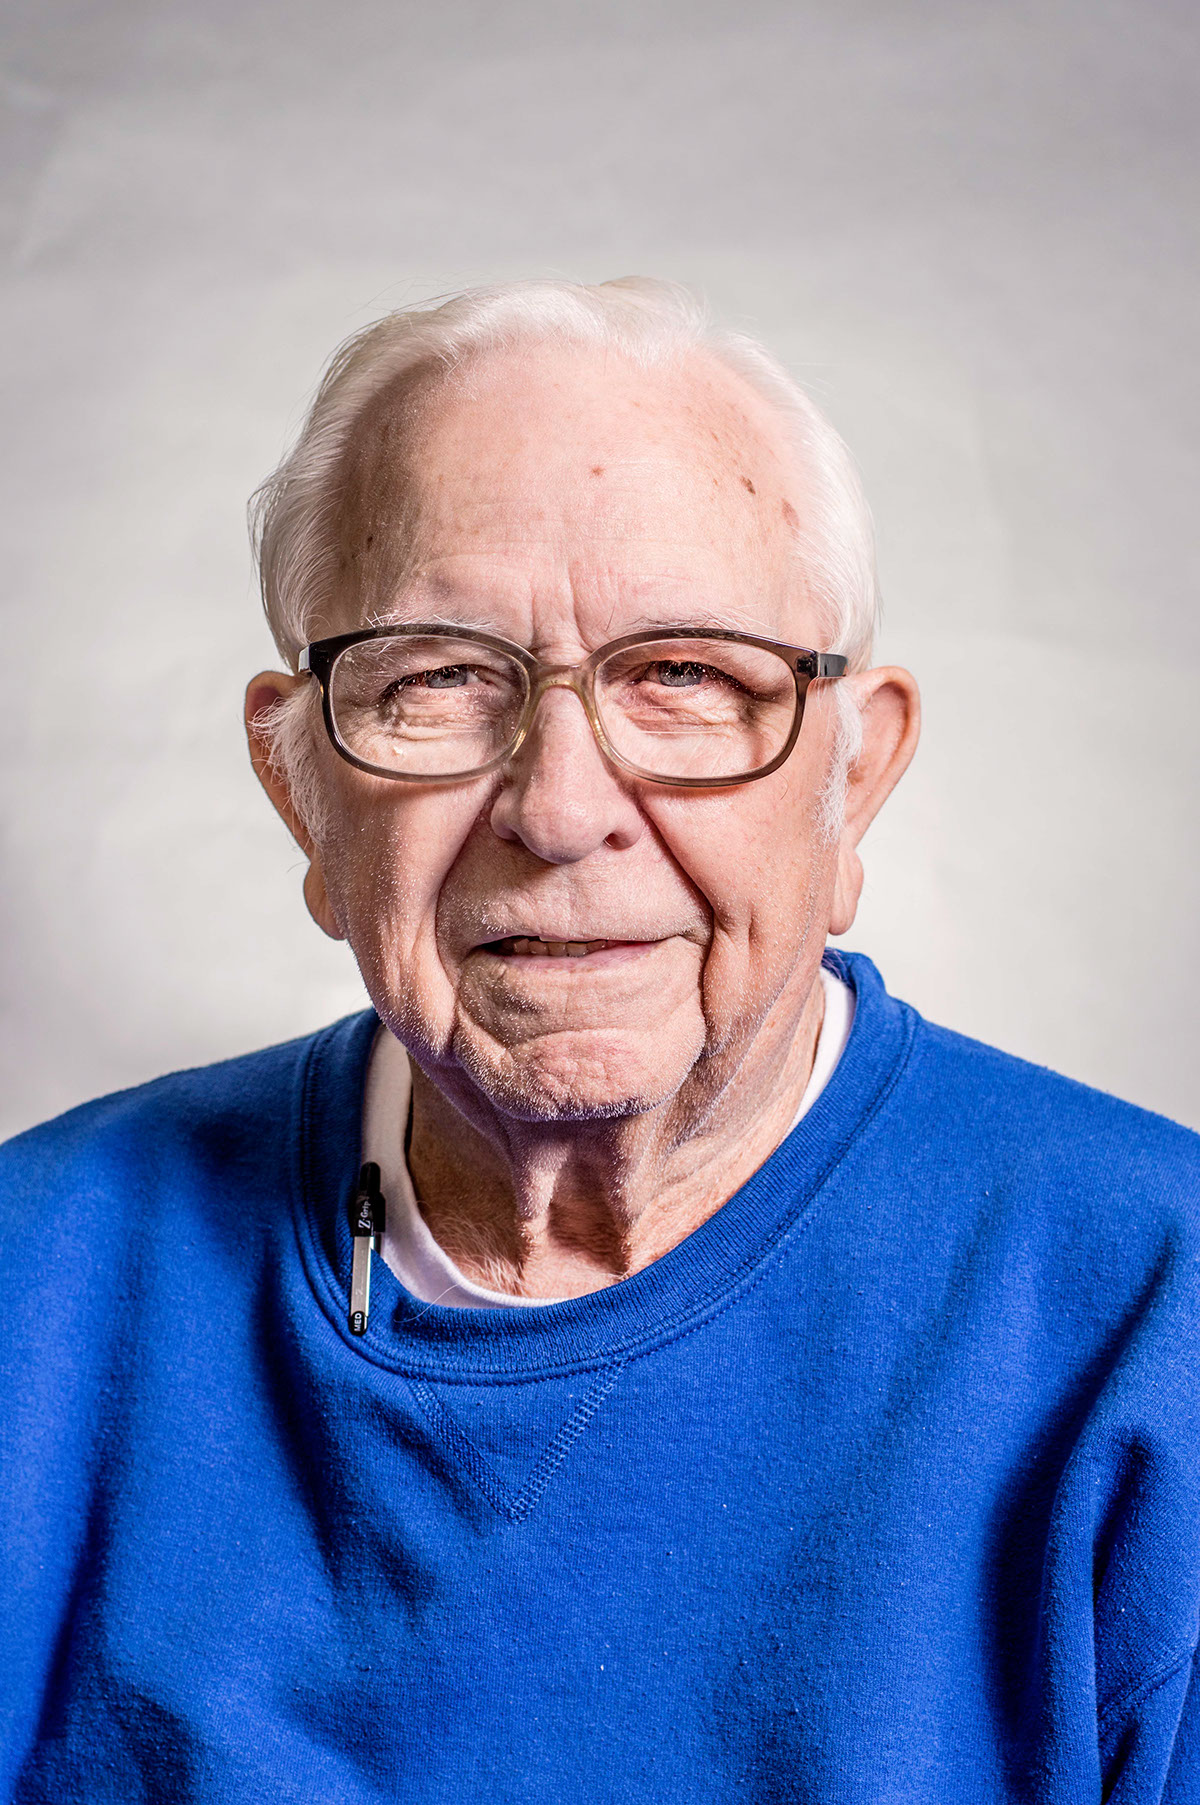 Elderly Senior Portriats portraits close up